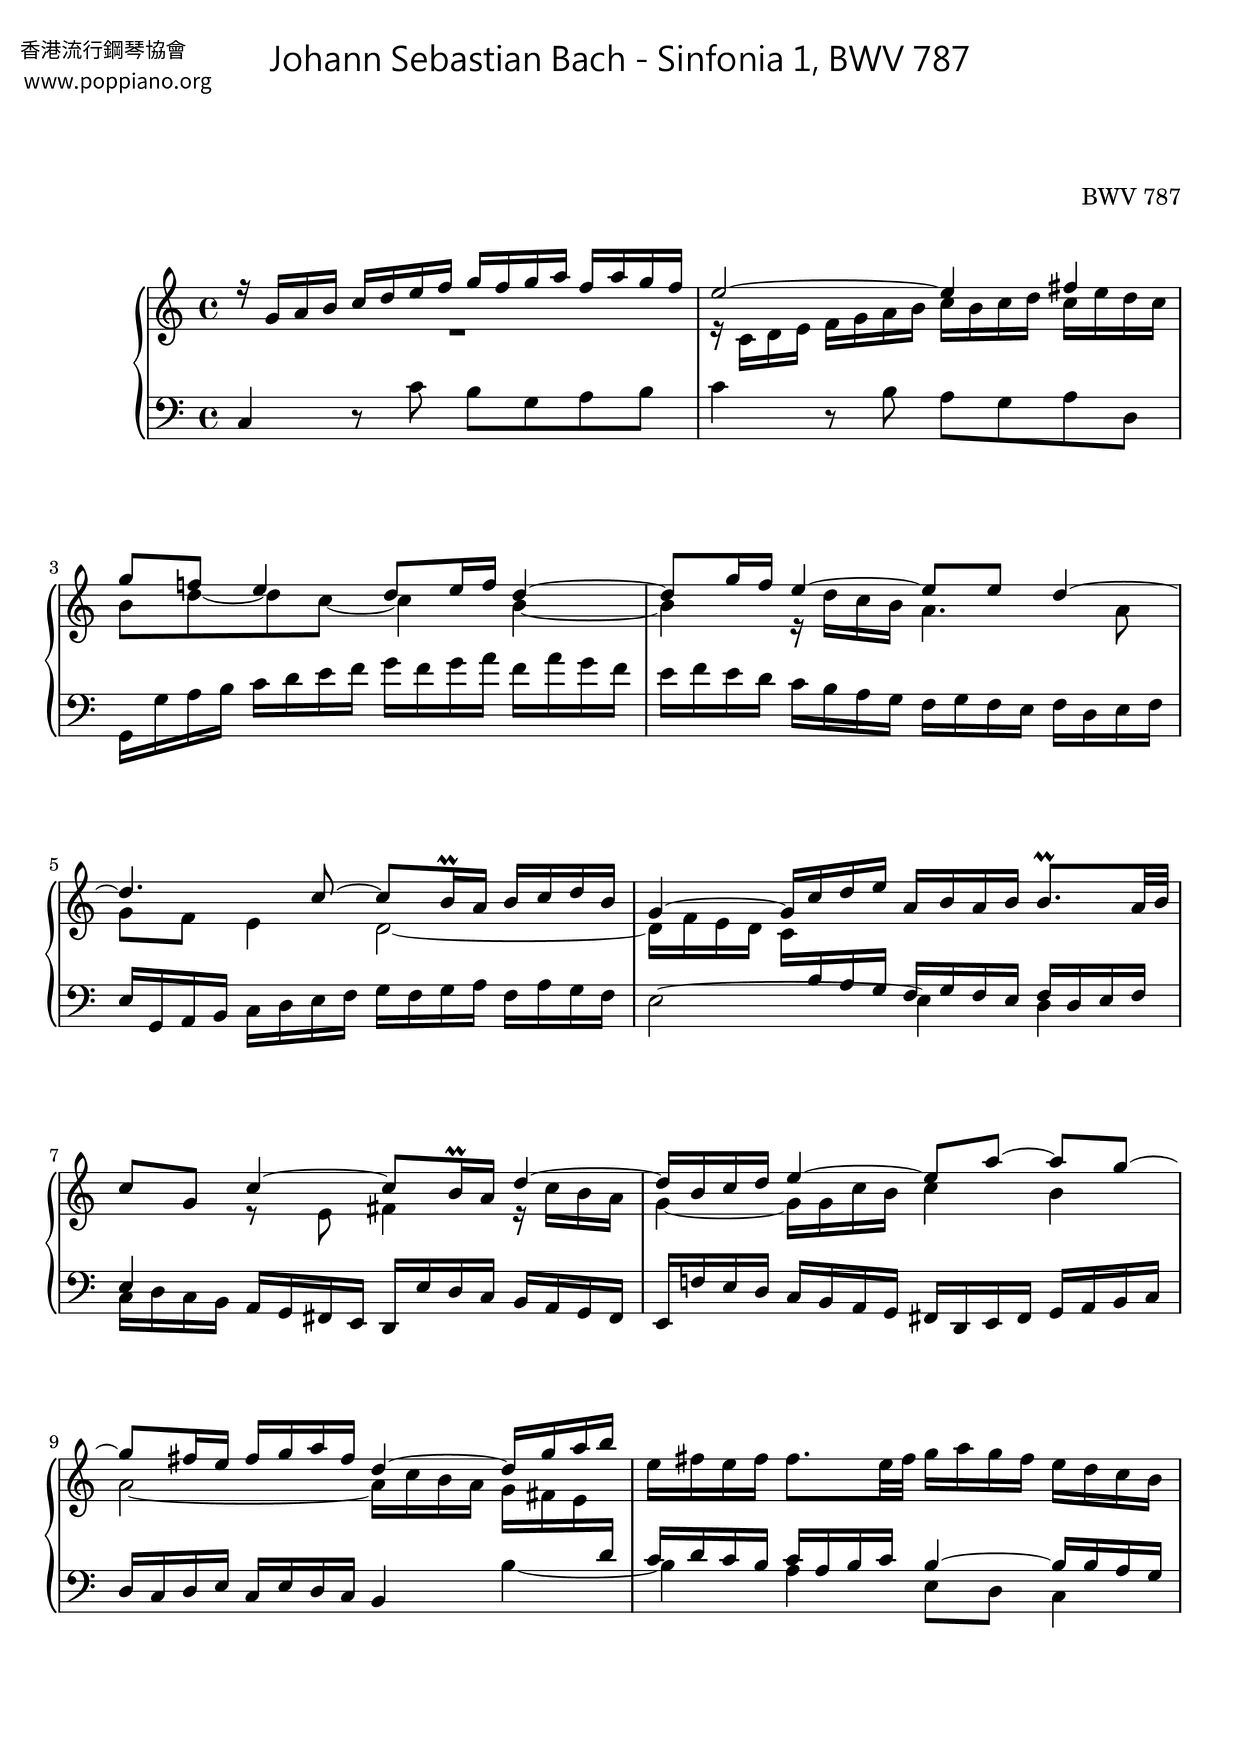 Sinfonia 1, BWV 787 Score